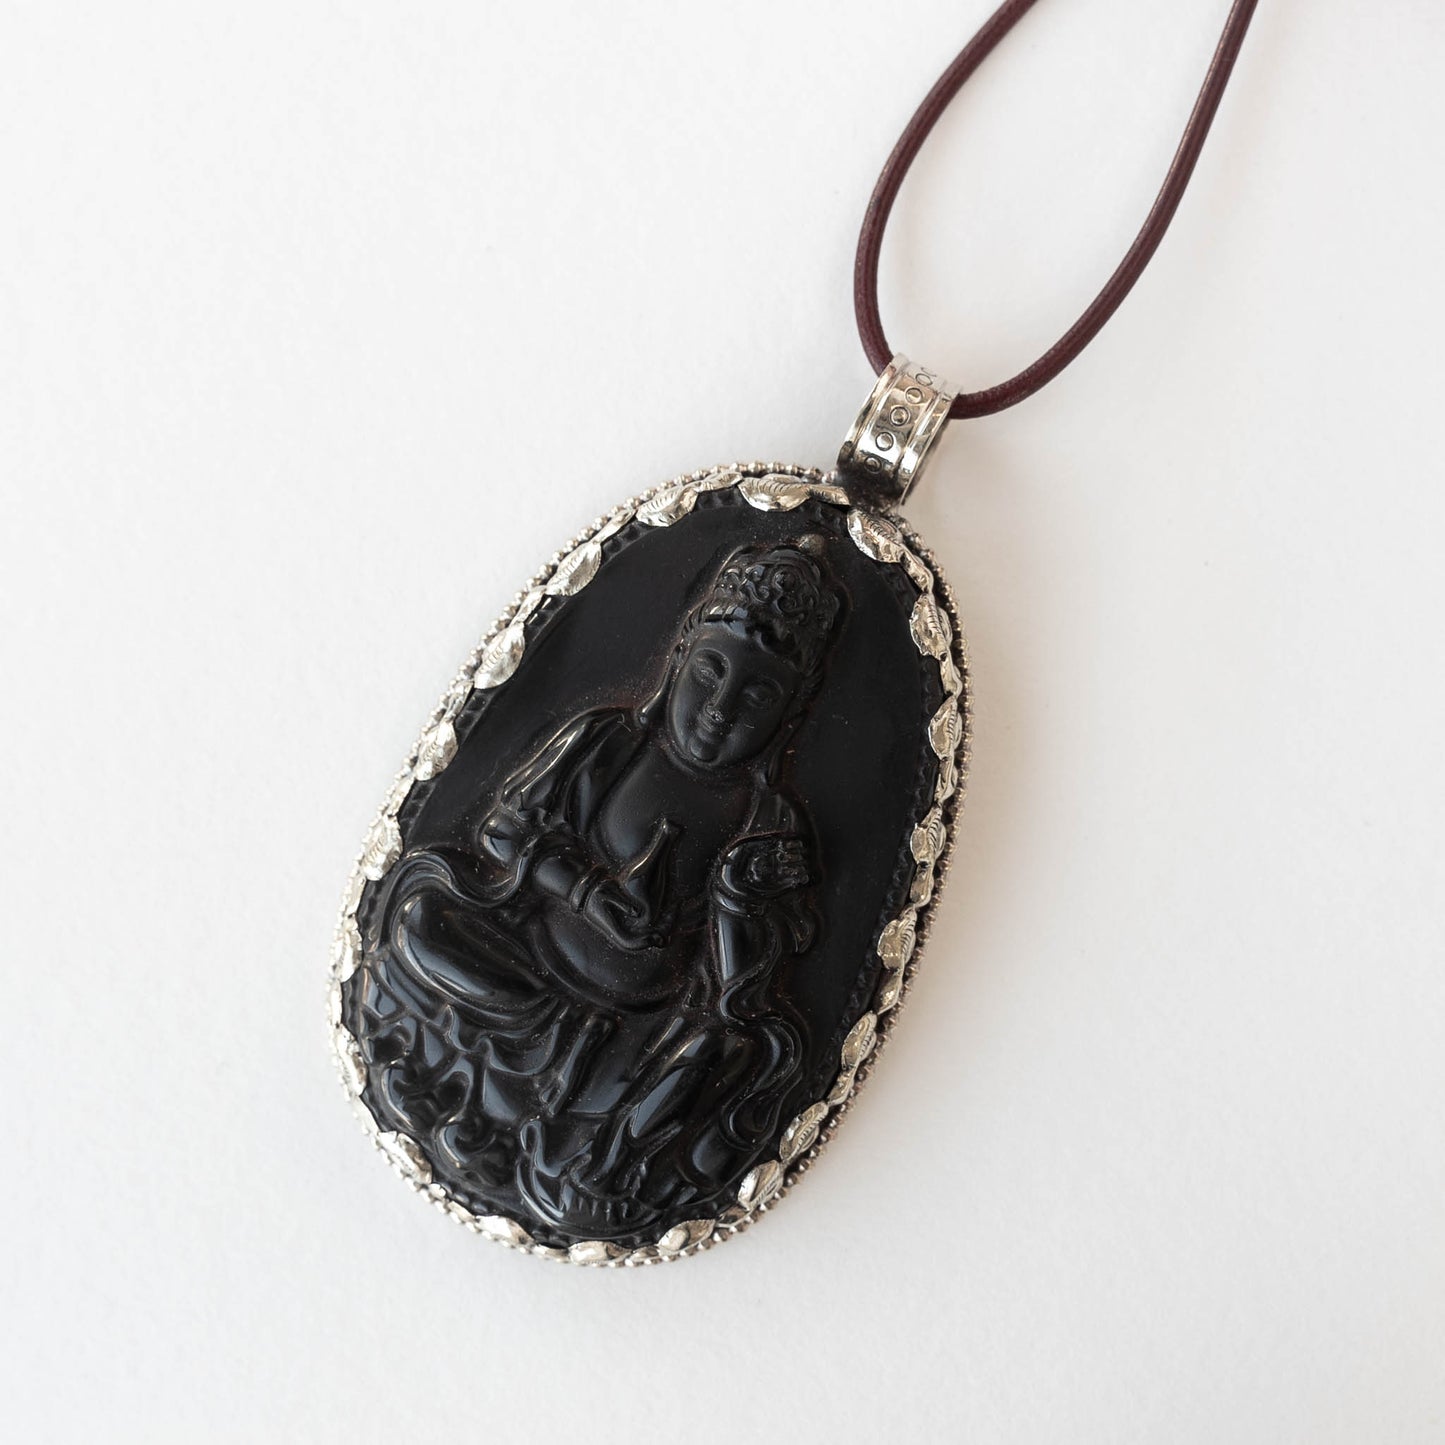 65mm Sitting Buddha Pendant - Black Matte Obsidian set in Tibetan Silver - 1 piece